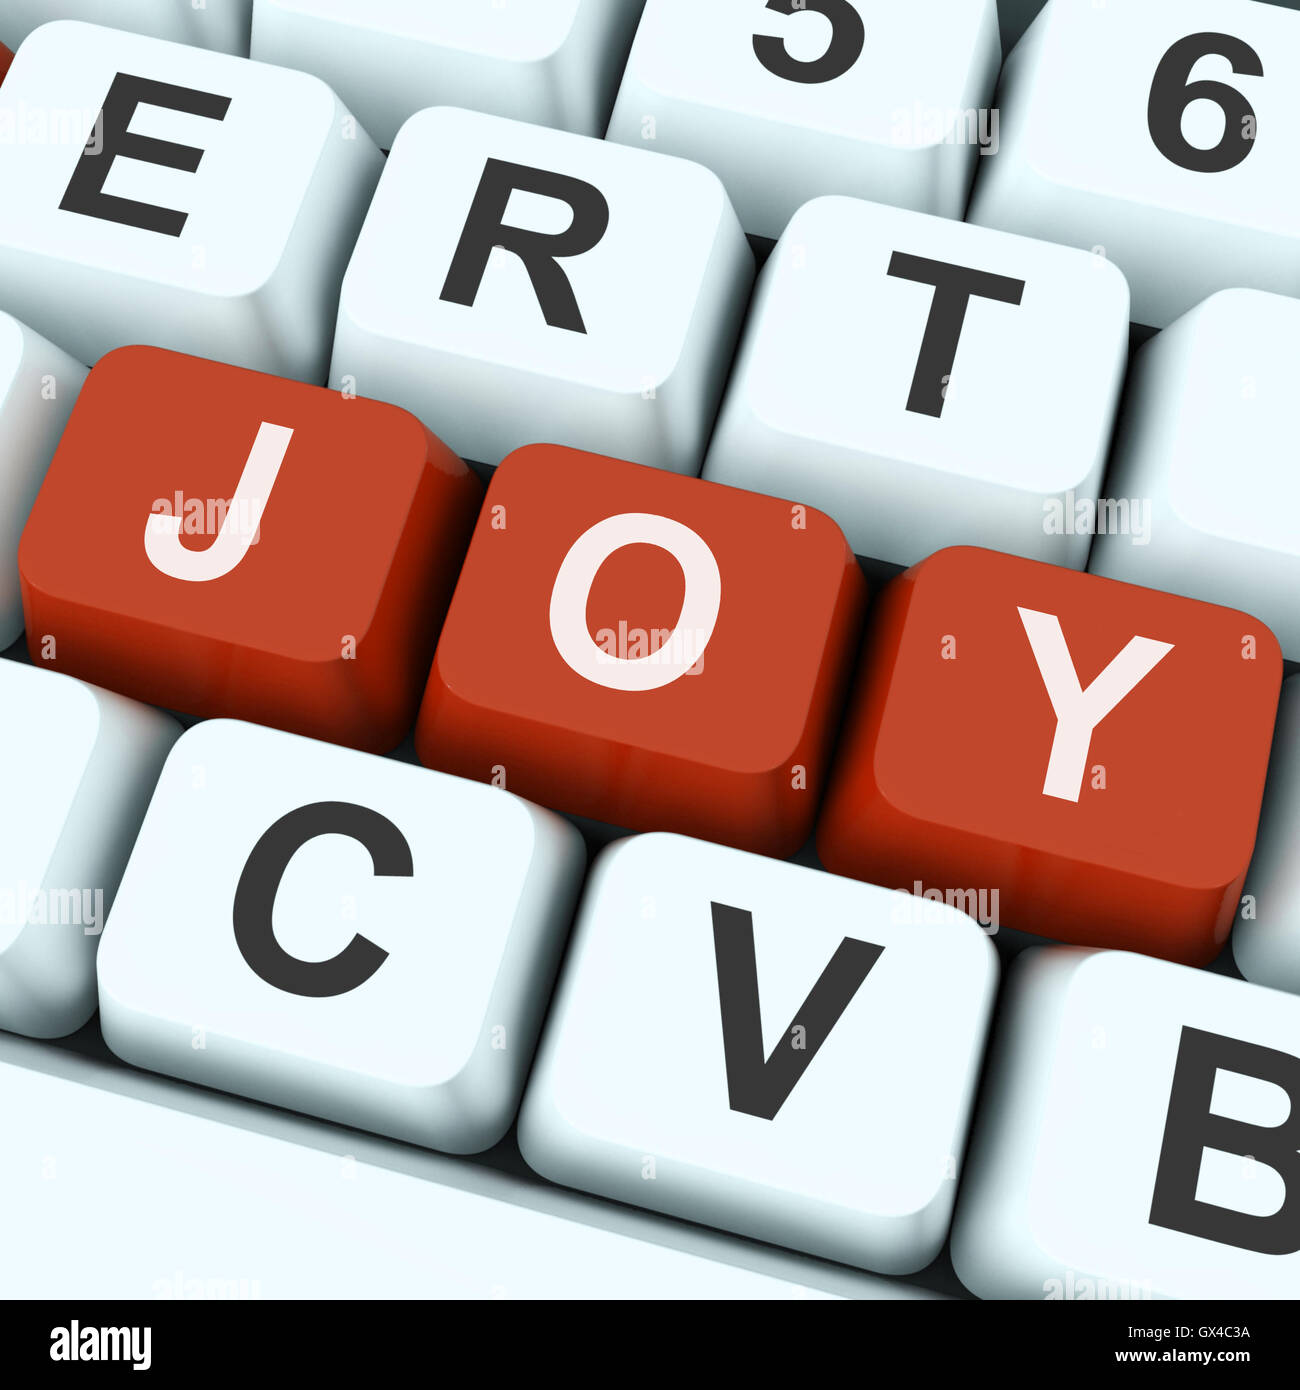 Joy Key Shows Fun Or Happiness Stock Photo